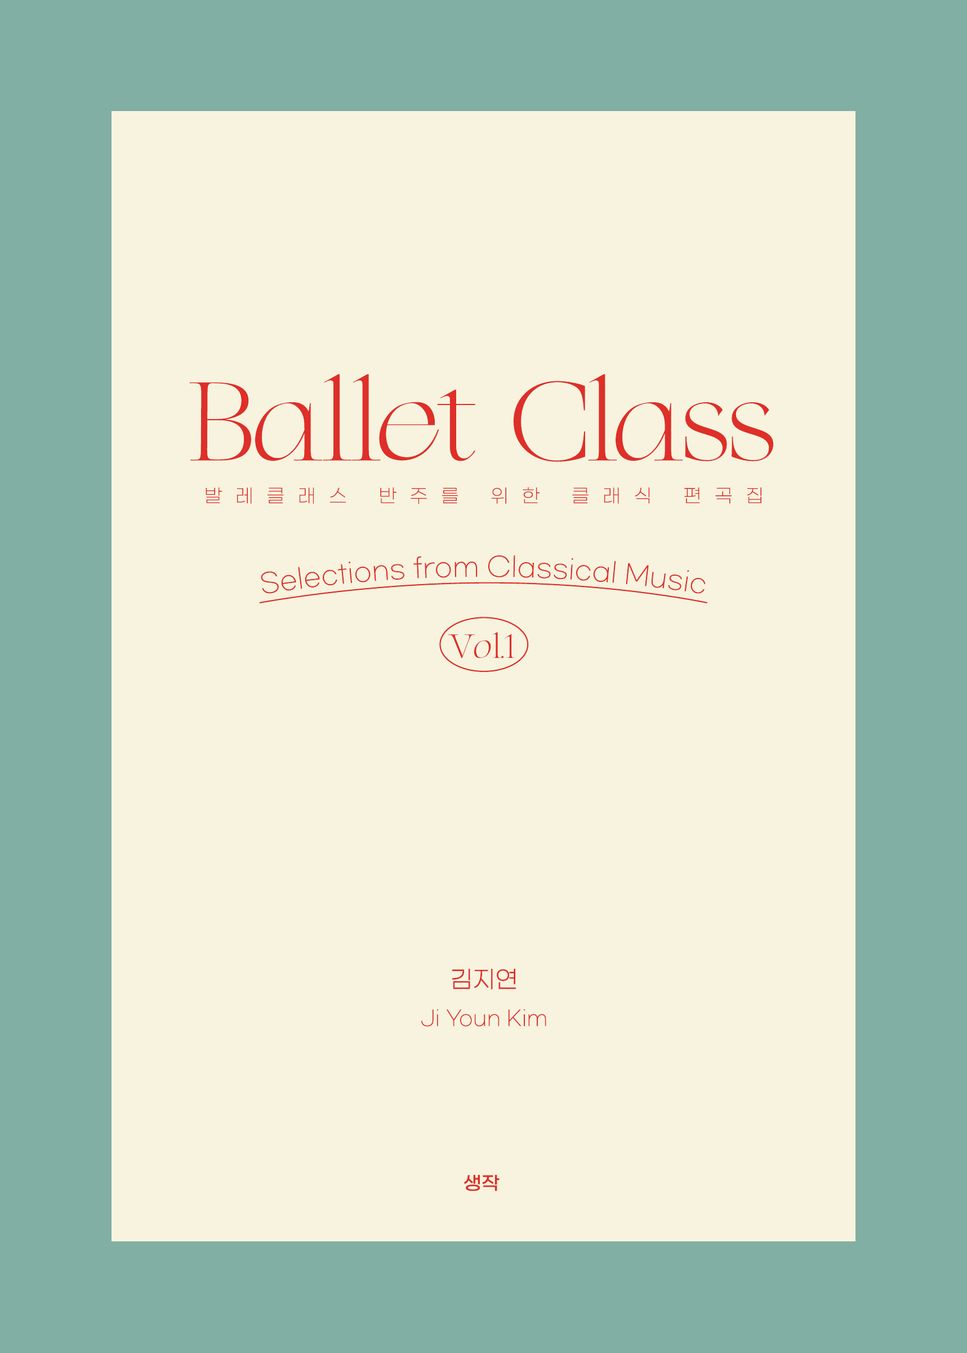 Ji Youn Kim - Ballet Class vol. 1 - 20. Waltz 1